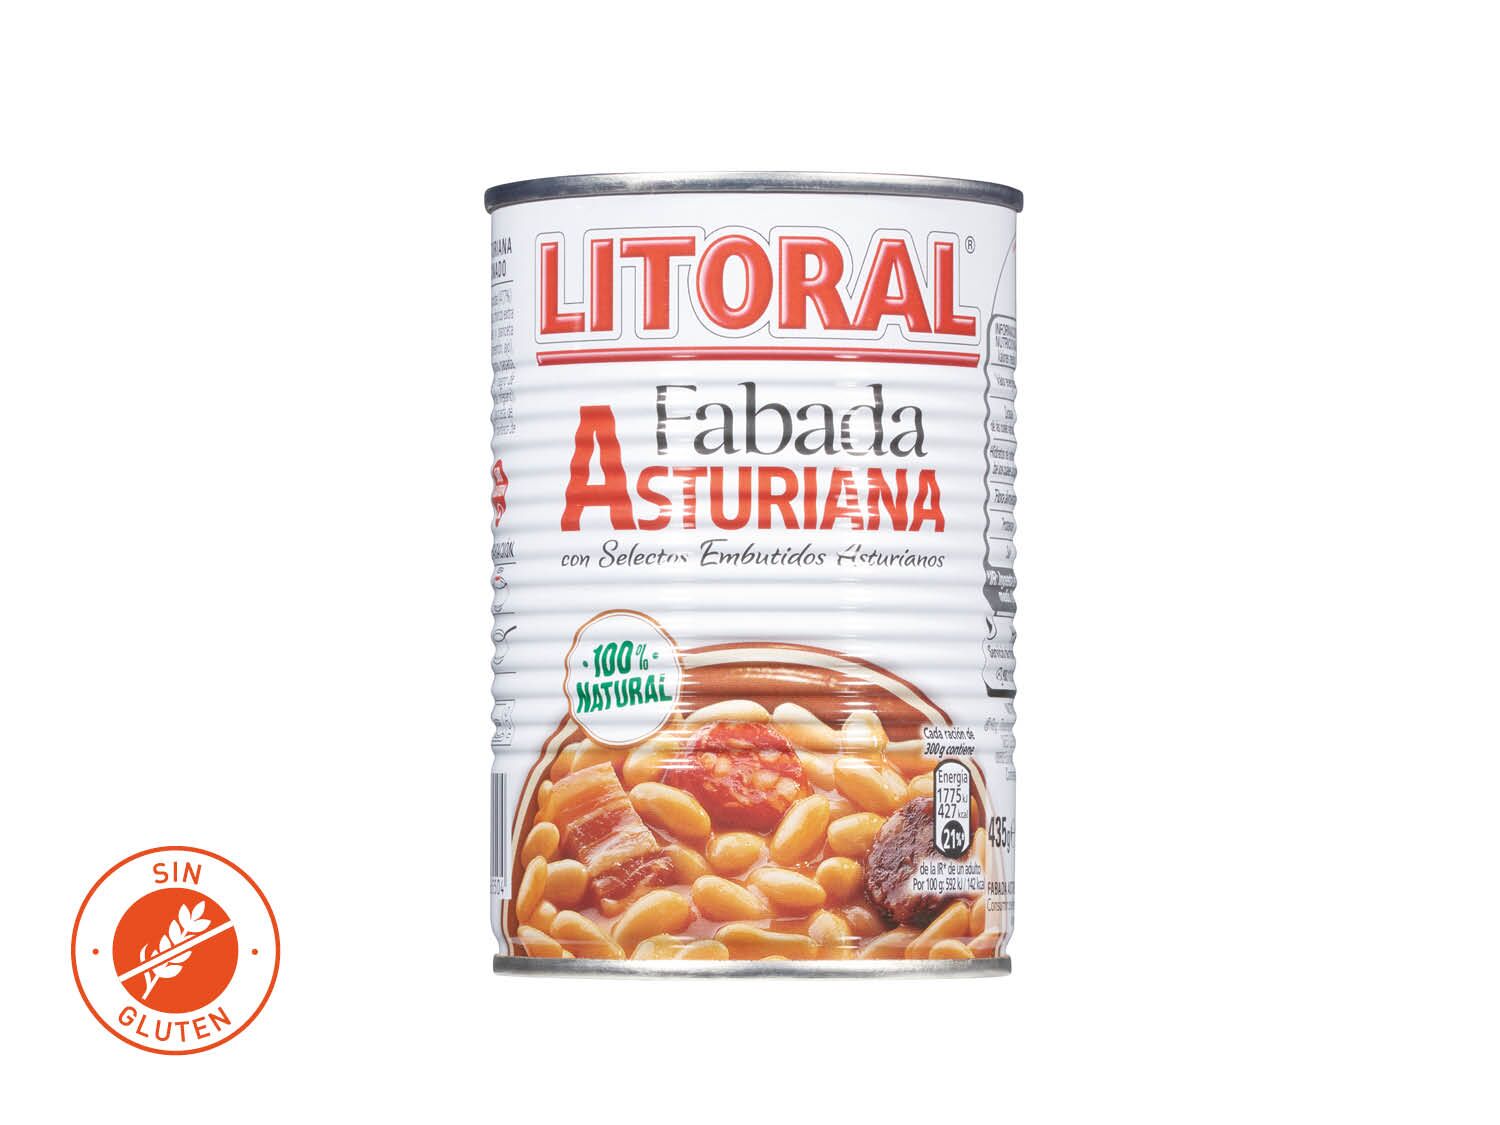 Litoral® Fabada asturiana